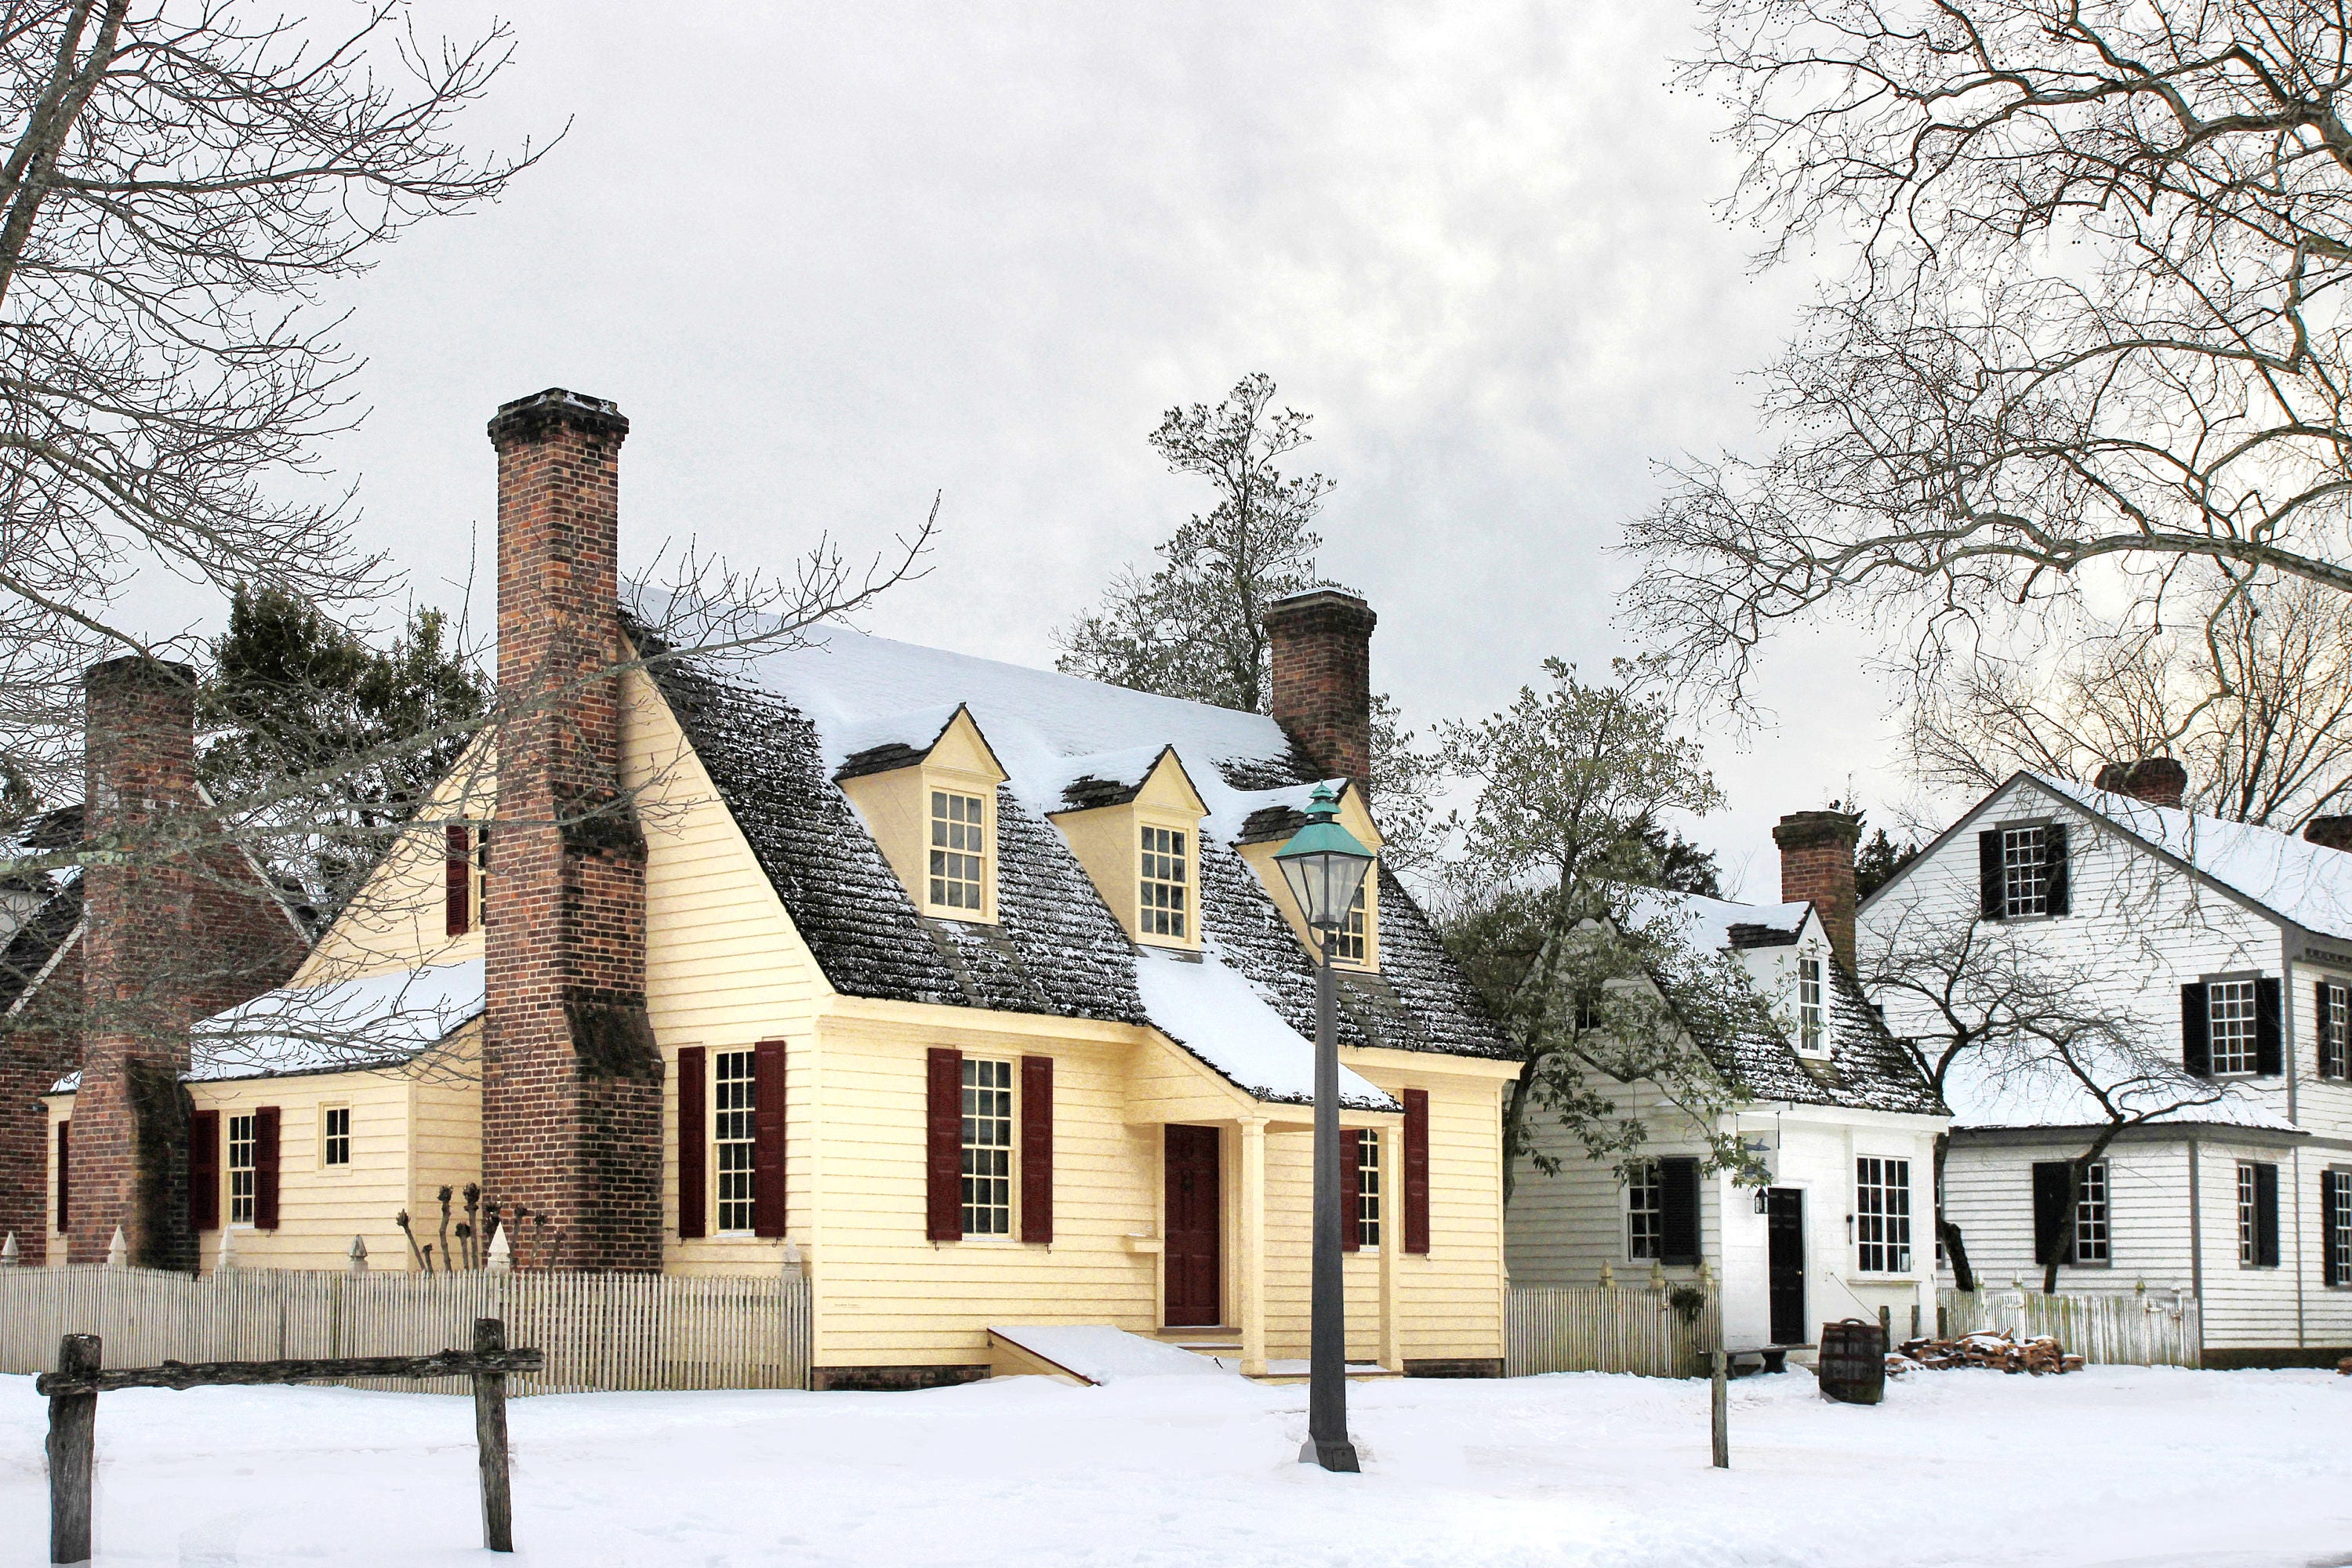 2 Colonial Williamsburg Christmas Boxwood & Pine Needlepoint